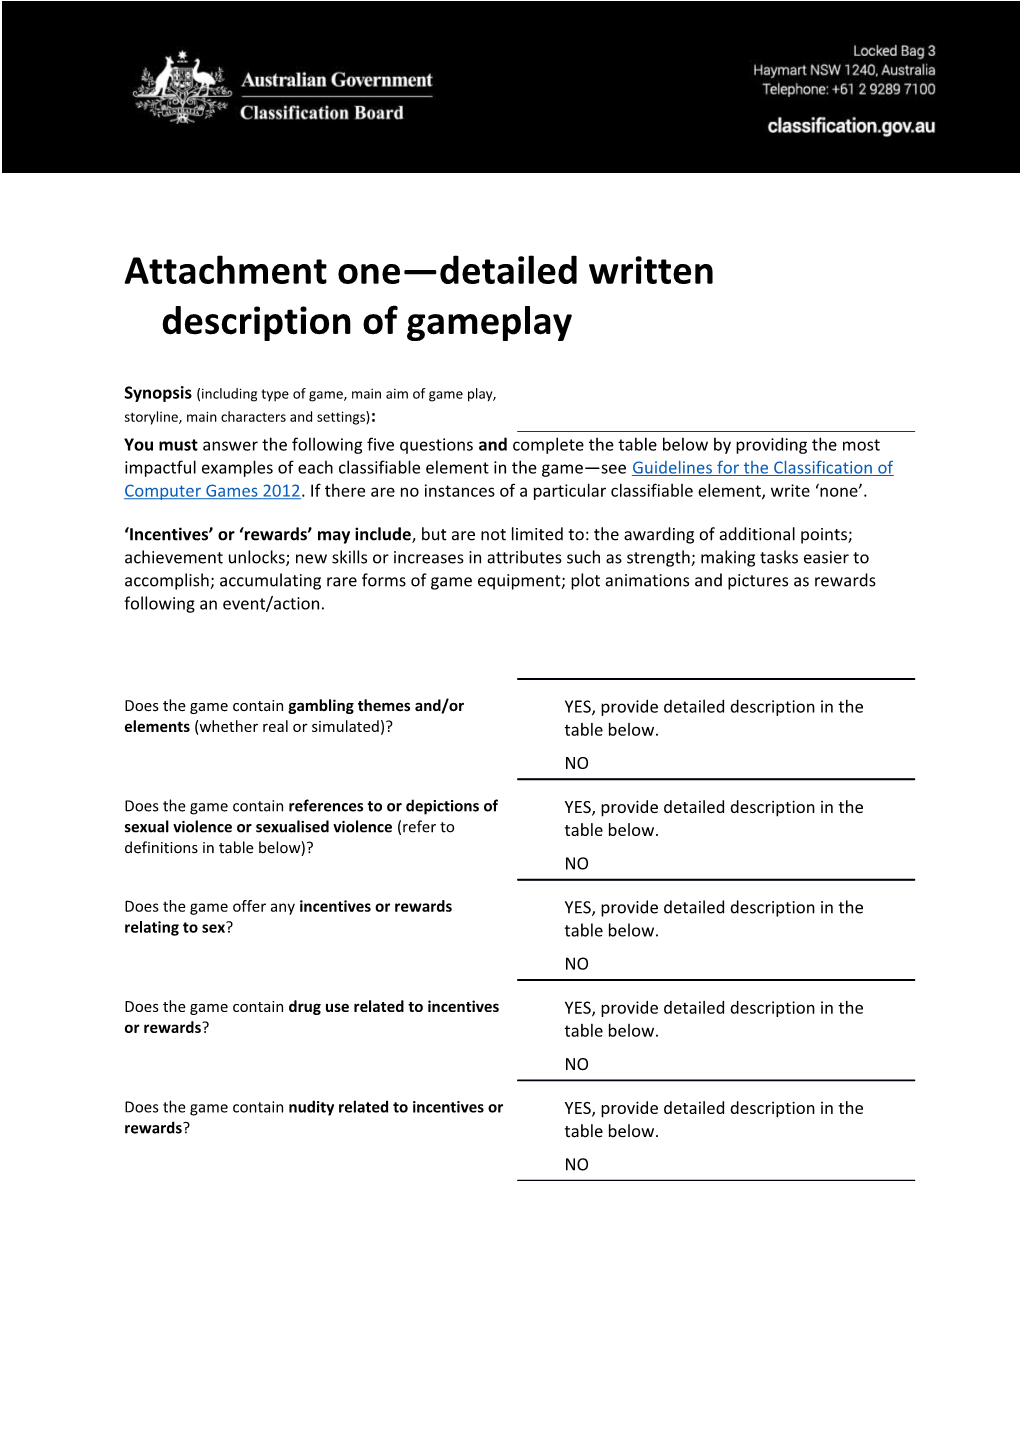 Attachment One Detailed Written Description of Gameplay